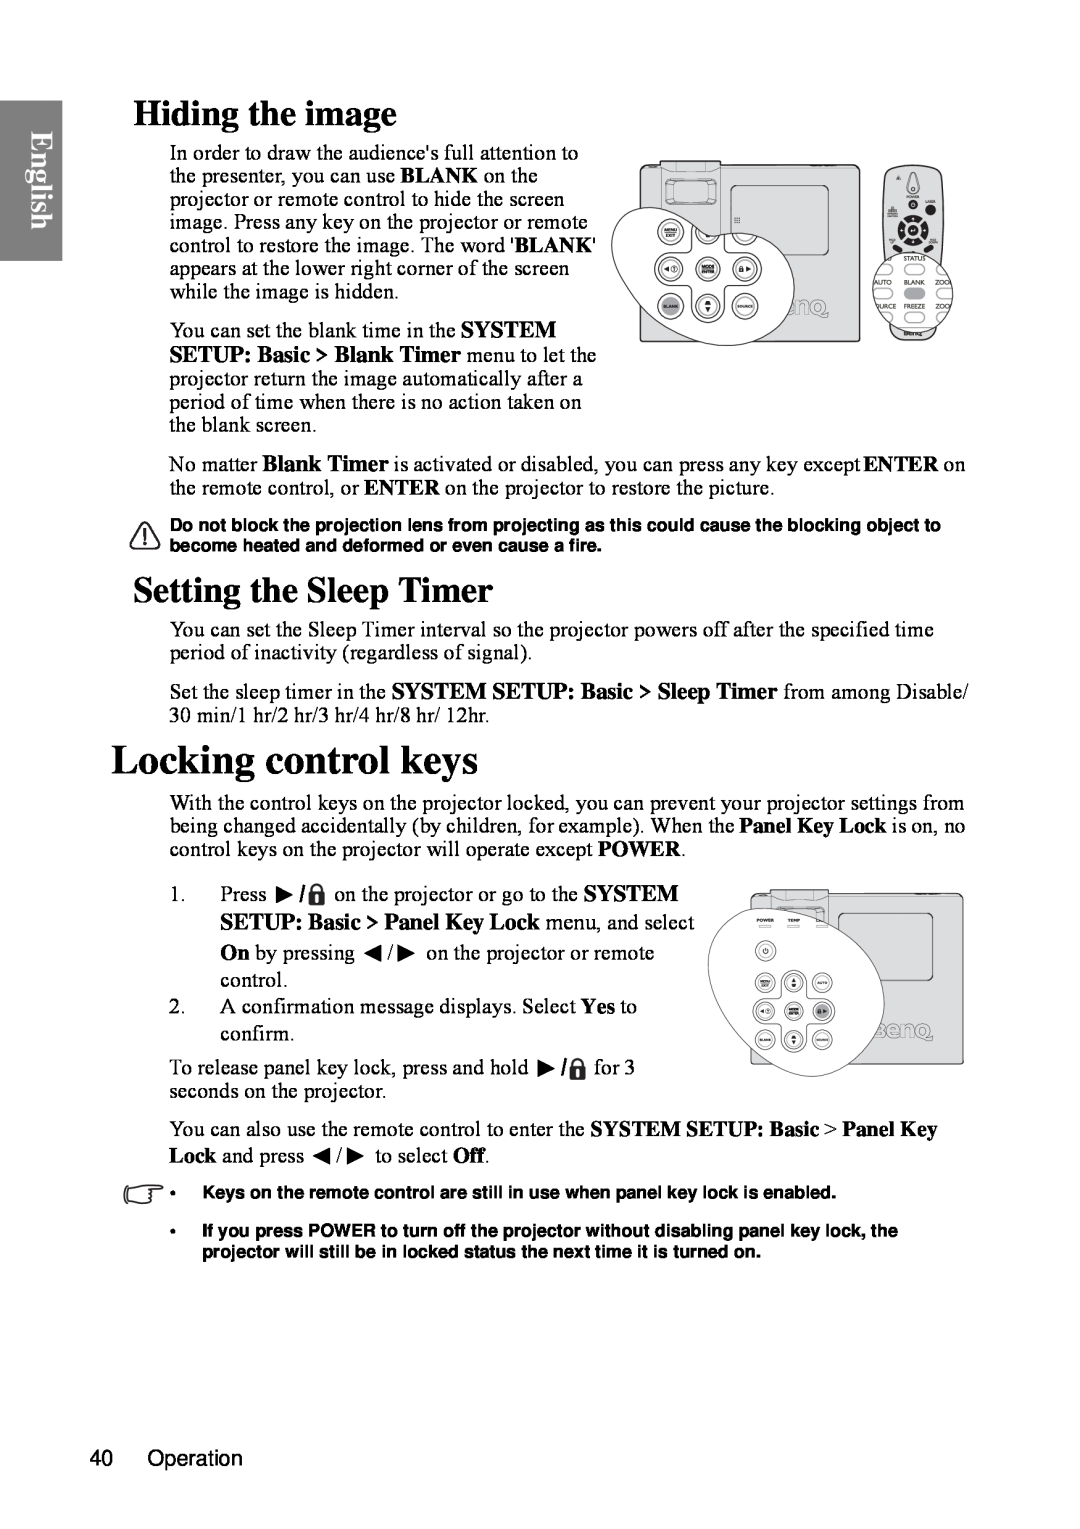 BenQ SP840 user manual Locking control keys, Hiding the image, Setting the Sleep Timer, English 